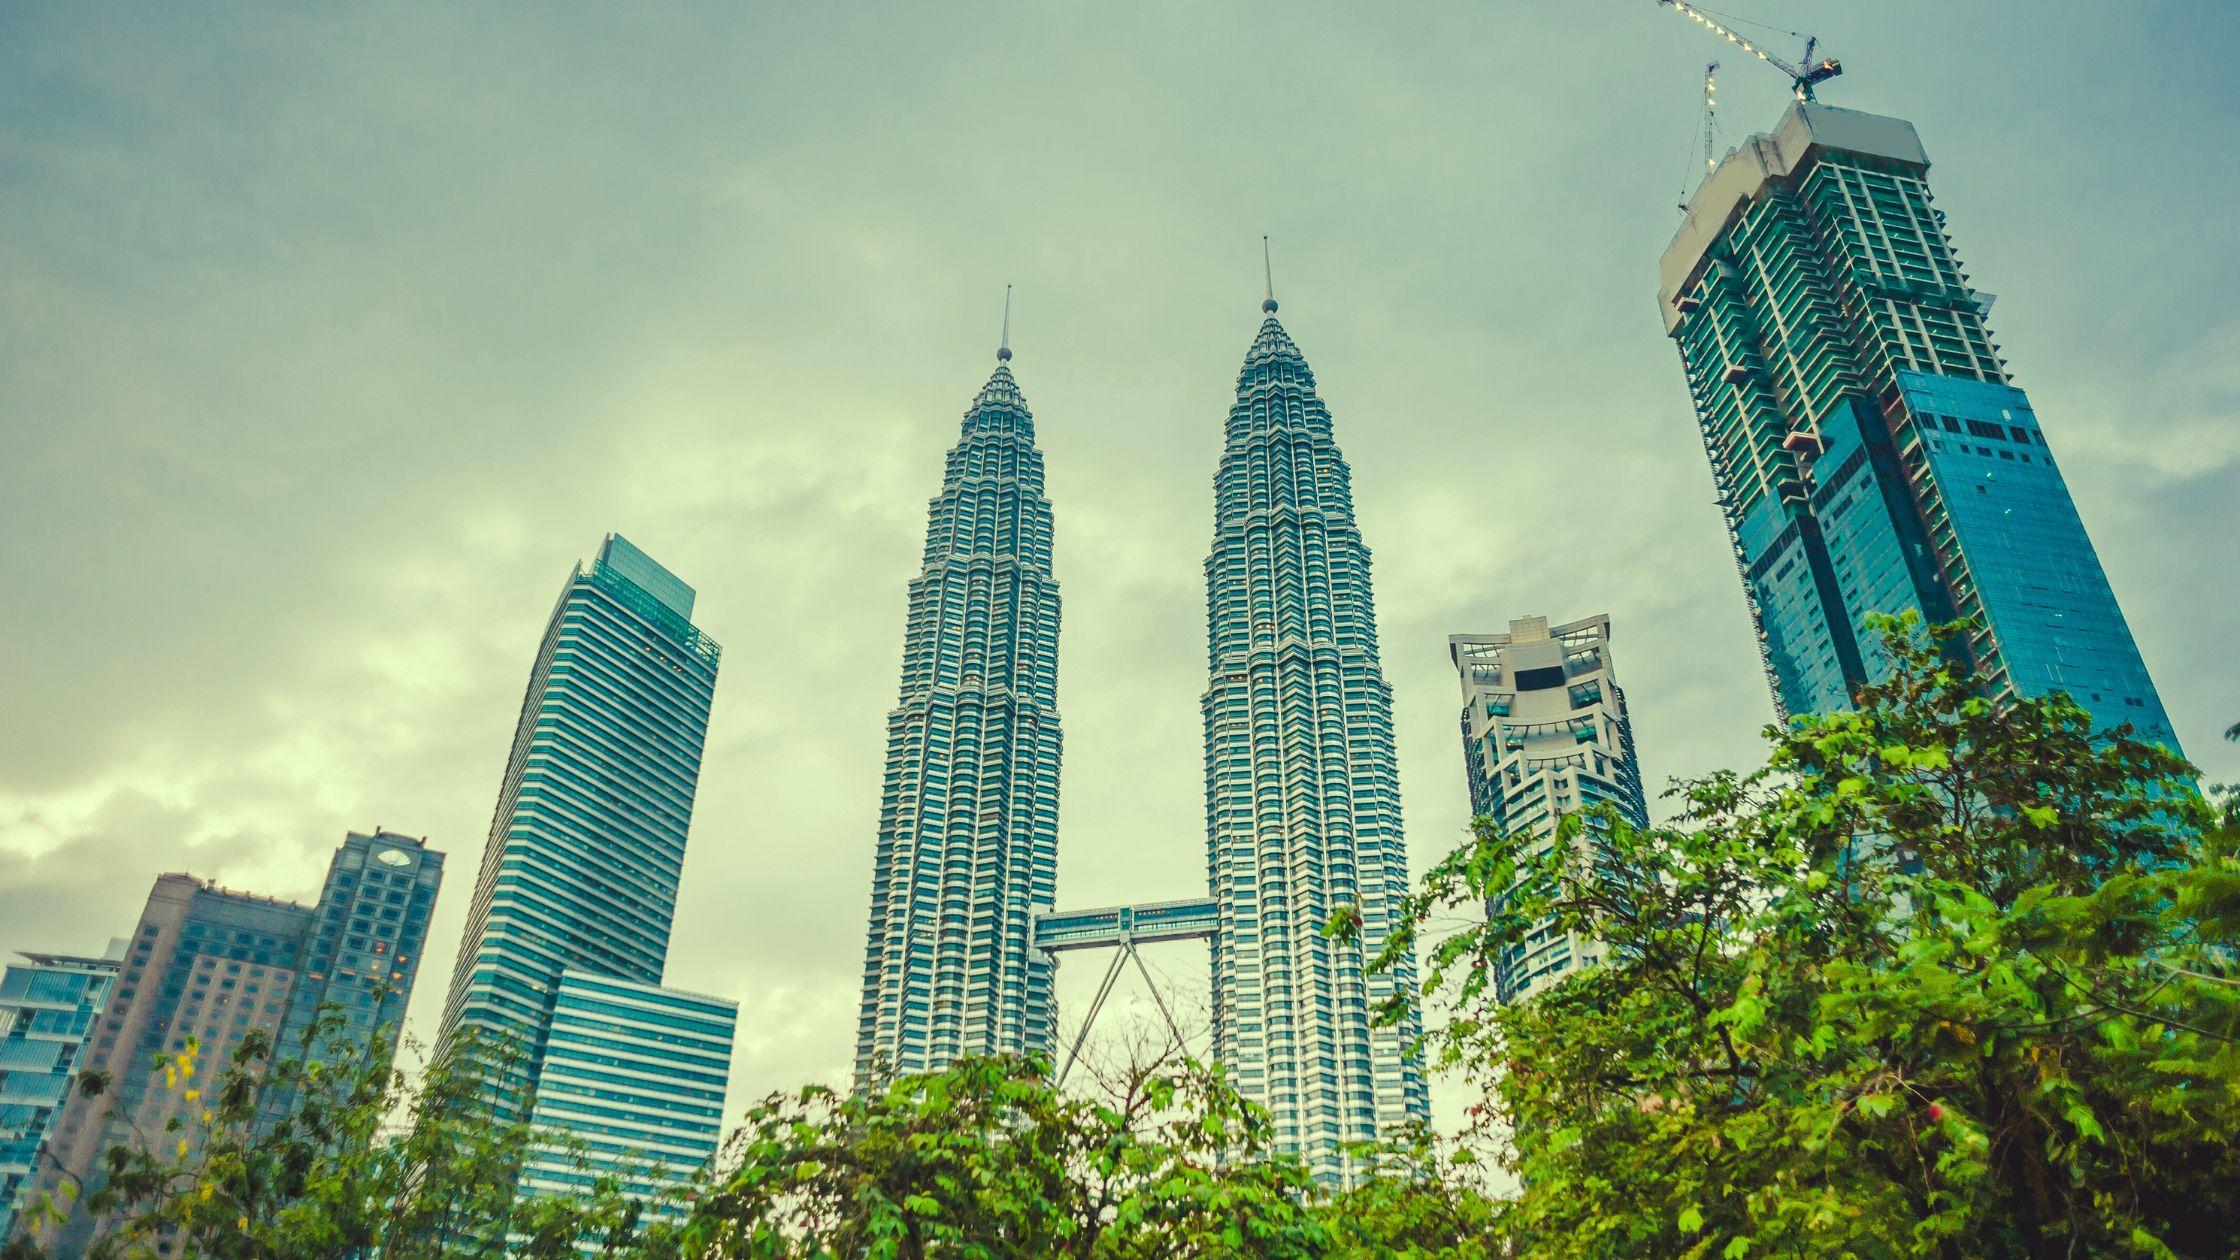 Malaysia's Nature-Based Initiatives to Achieve Net Zero Emissions